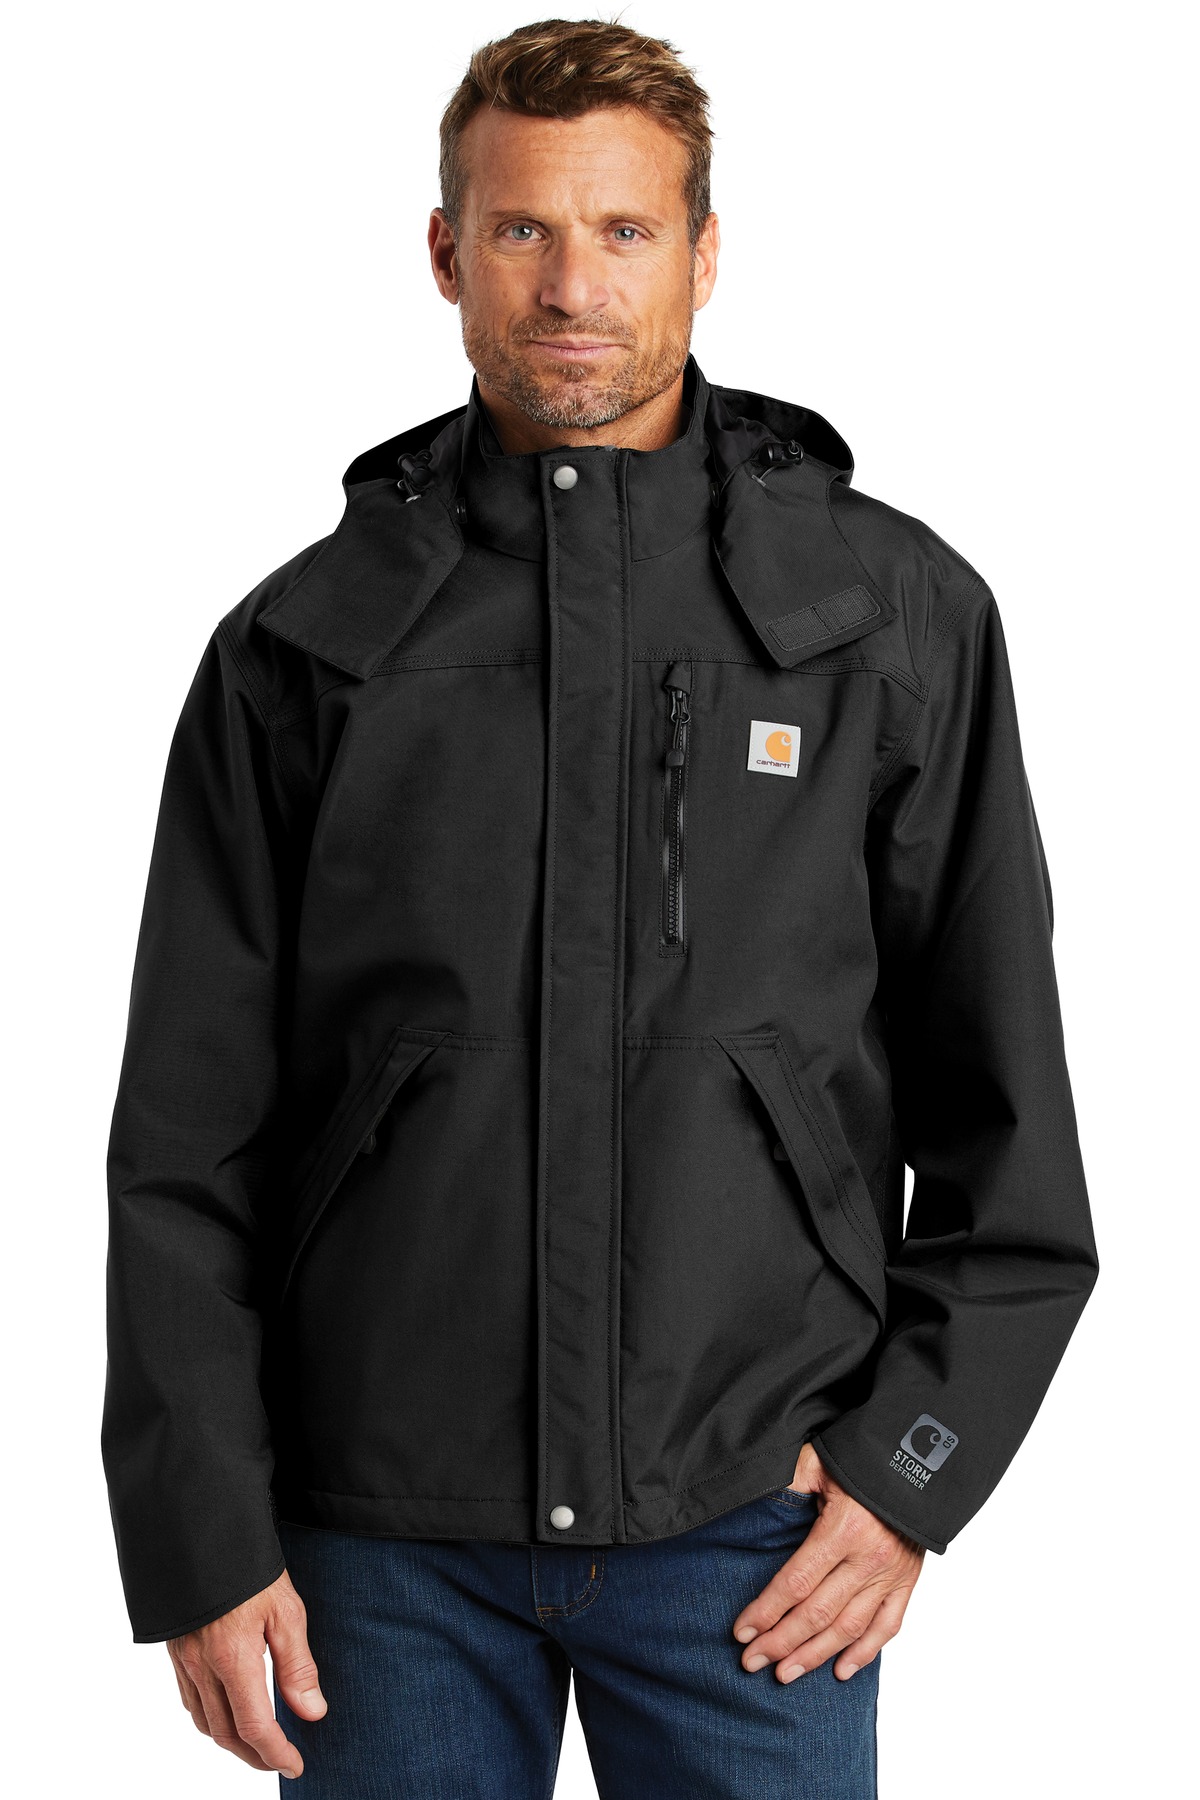 Carhartt Corporate Industrial Outerwear&Workwear ® Shoreline Jacket.-Carhartt